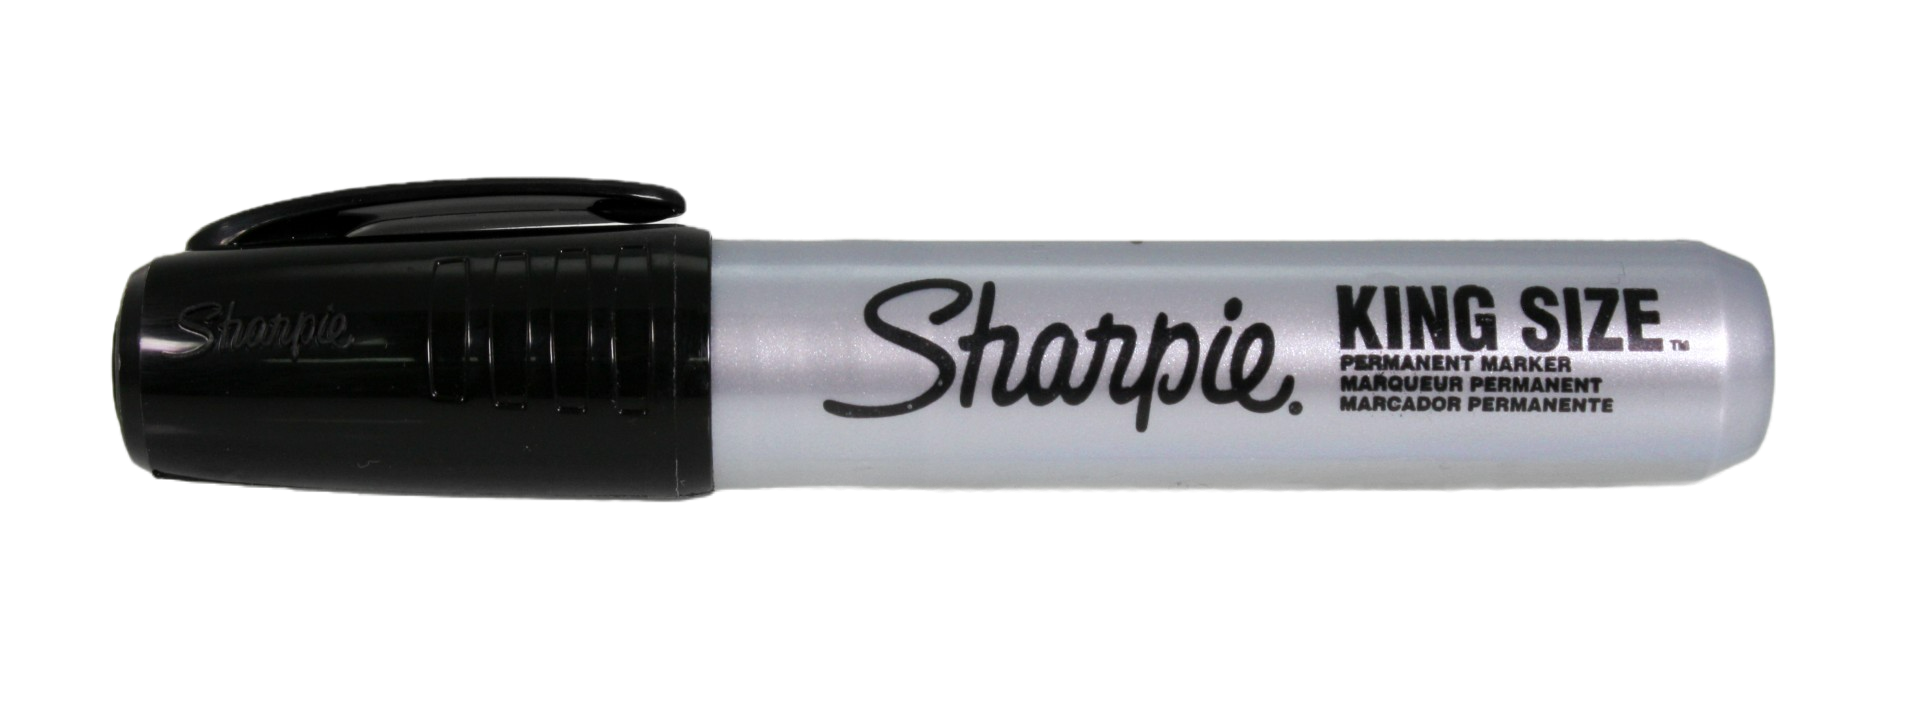 Sharpie King size marker, lid on